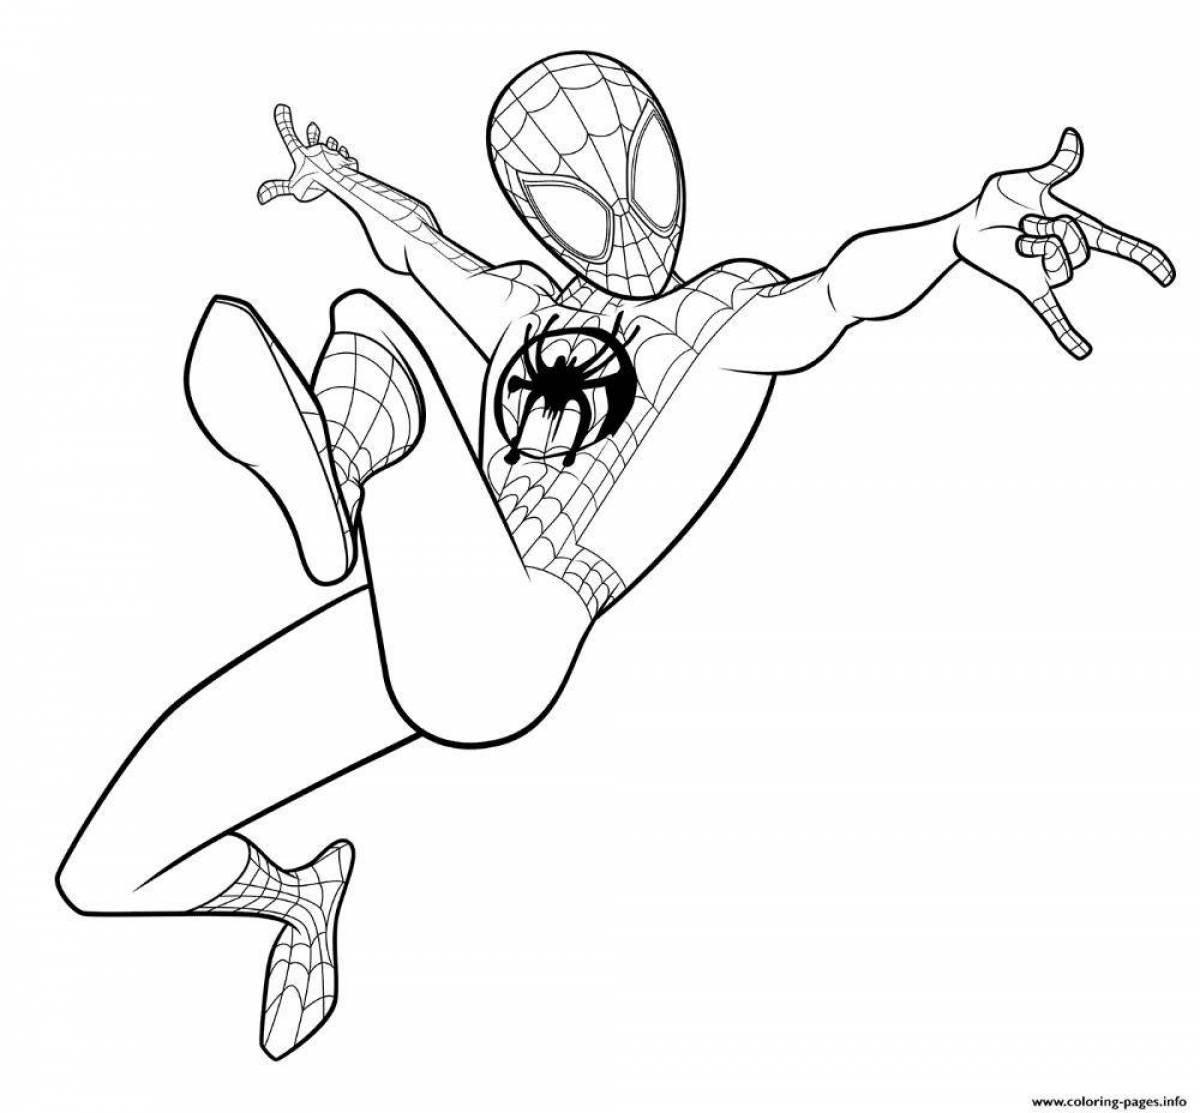 Playful coloring spider-man miles morales